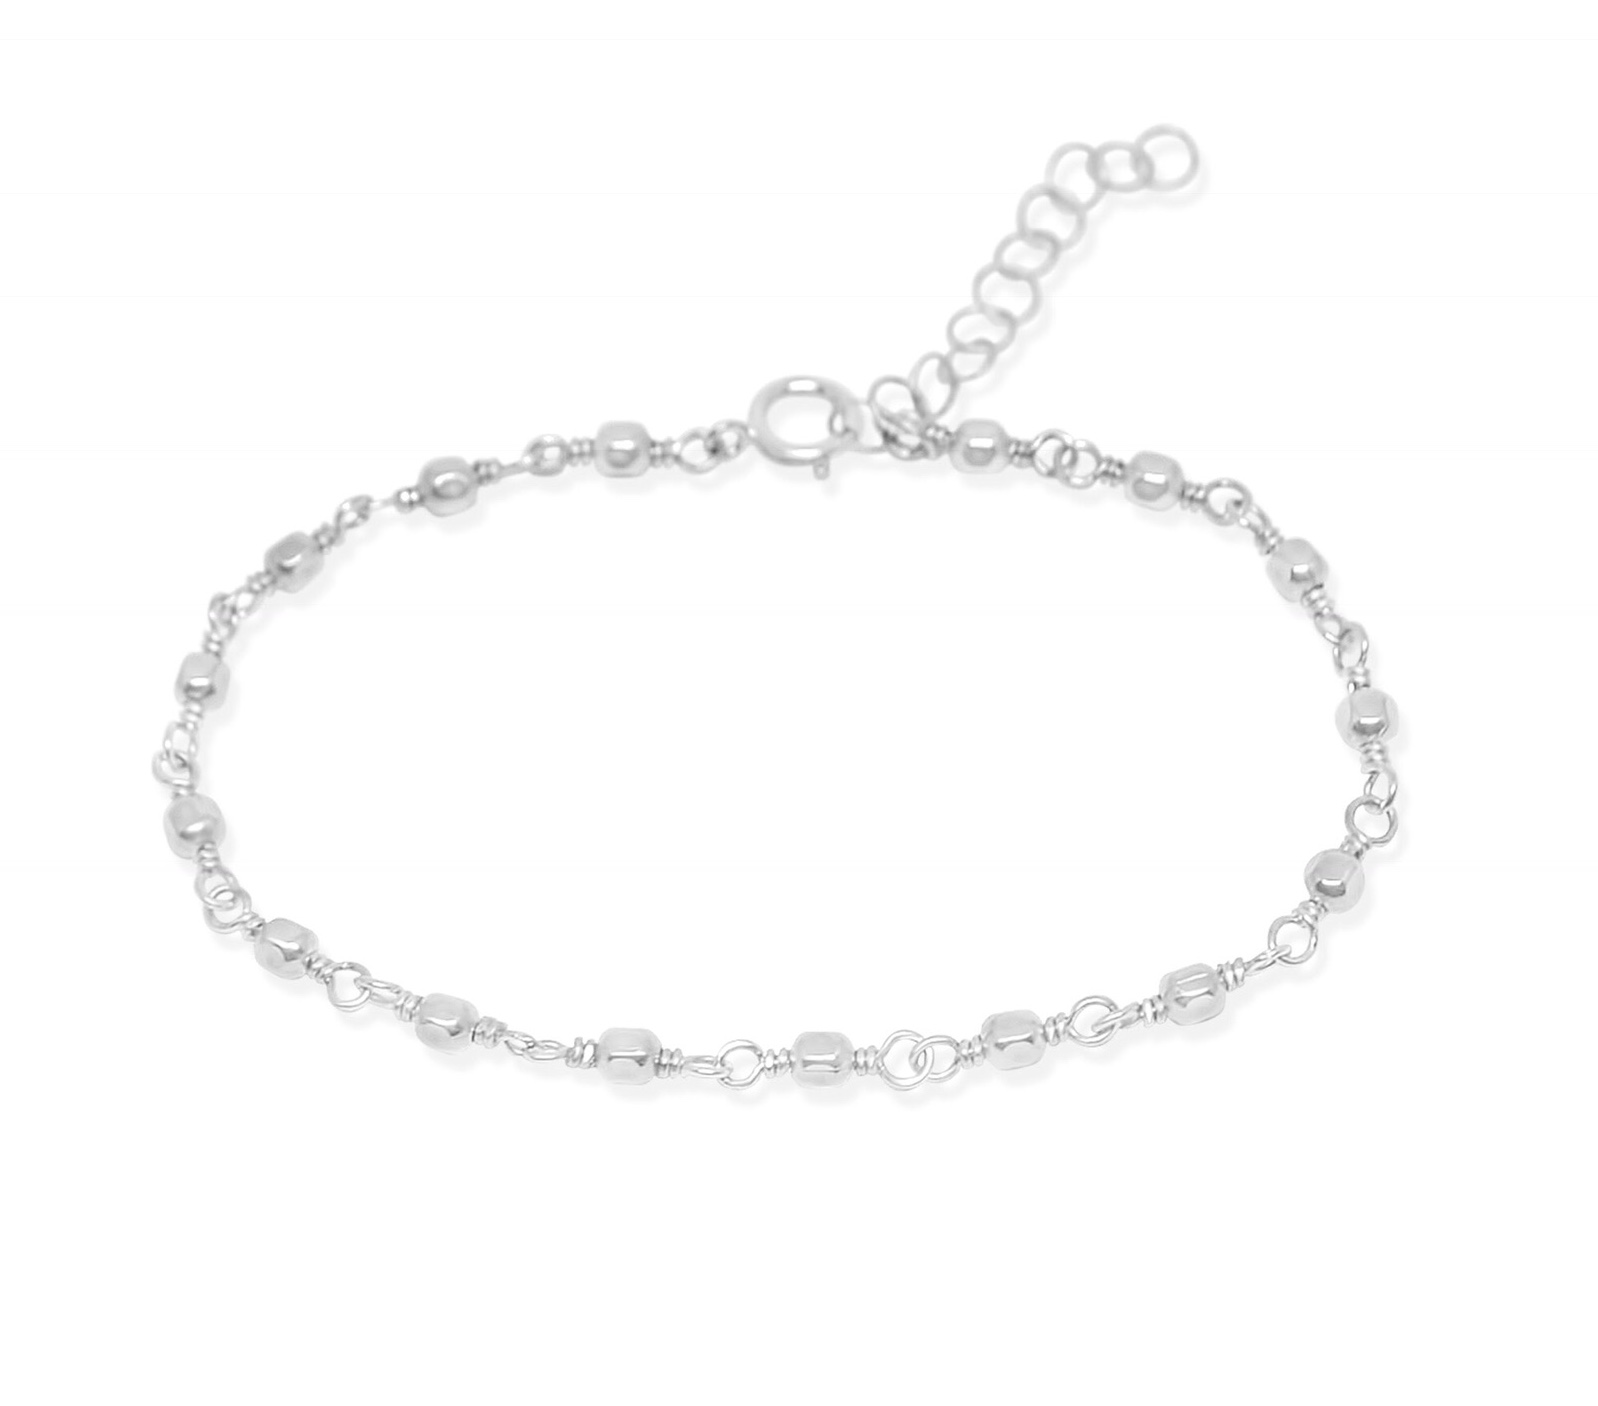 Bracelets — Boy Cherie Jewelry: Delicate Fashion Jewelry That Won't ...